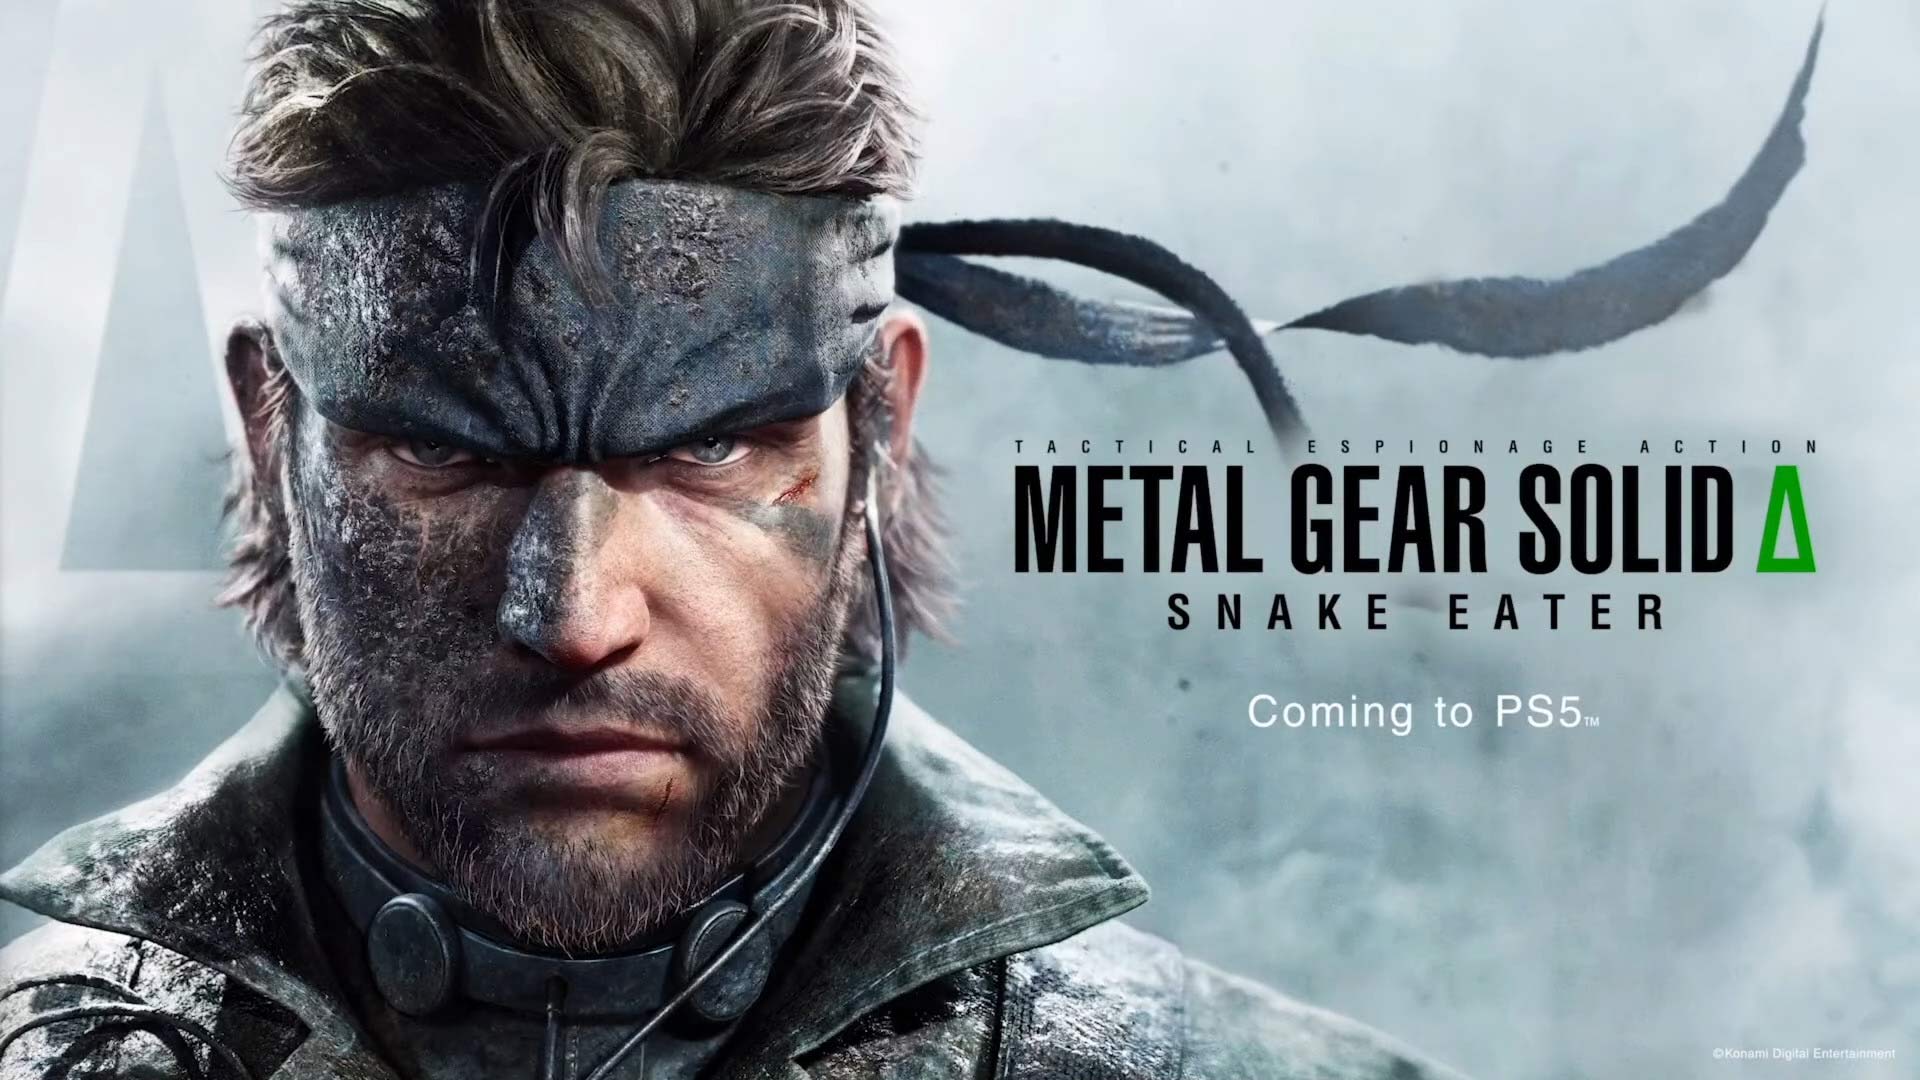 بررسی پنج سوال بسیار مهم در مورد بازی Metal Gear Solid Delta: Snake Eater